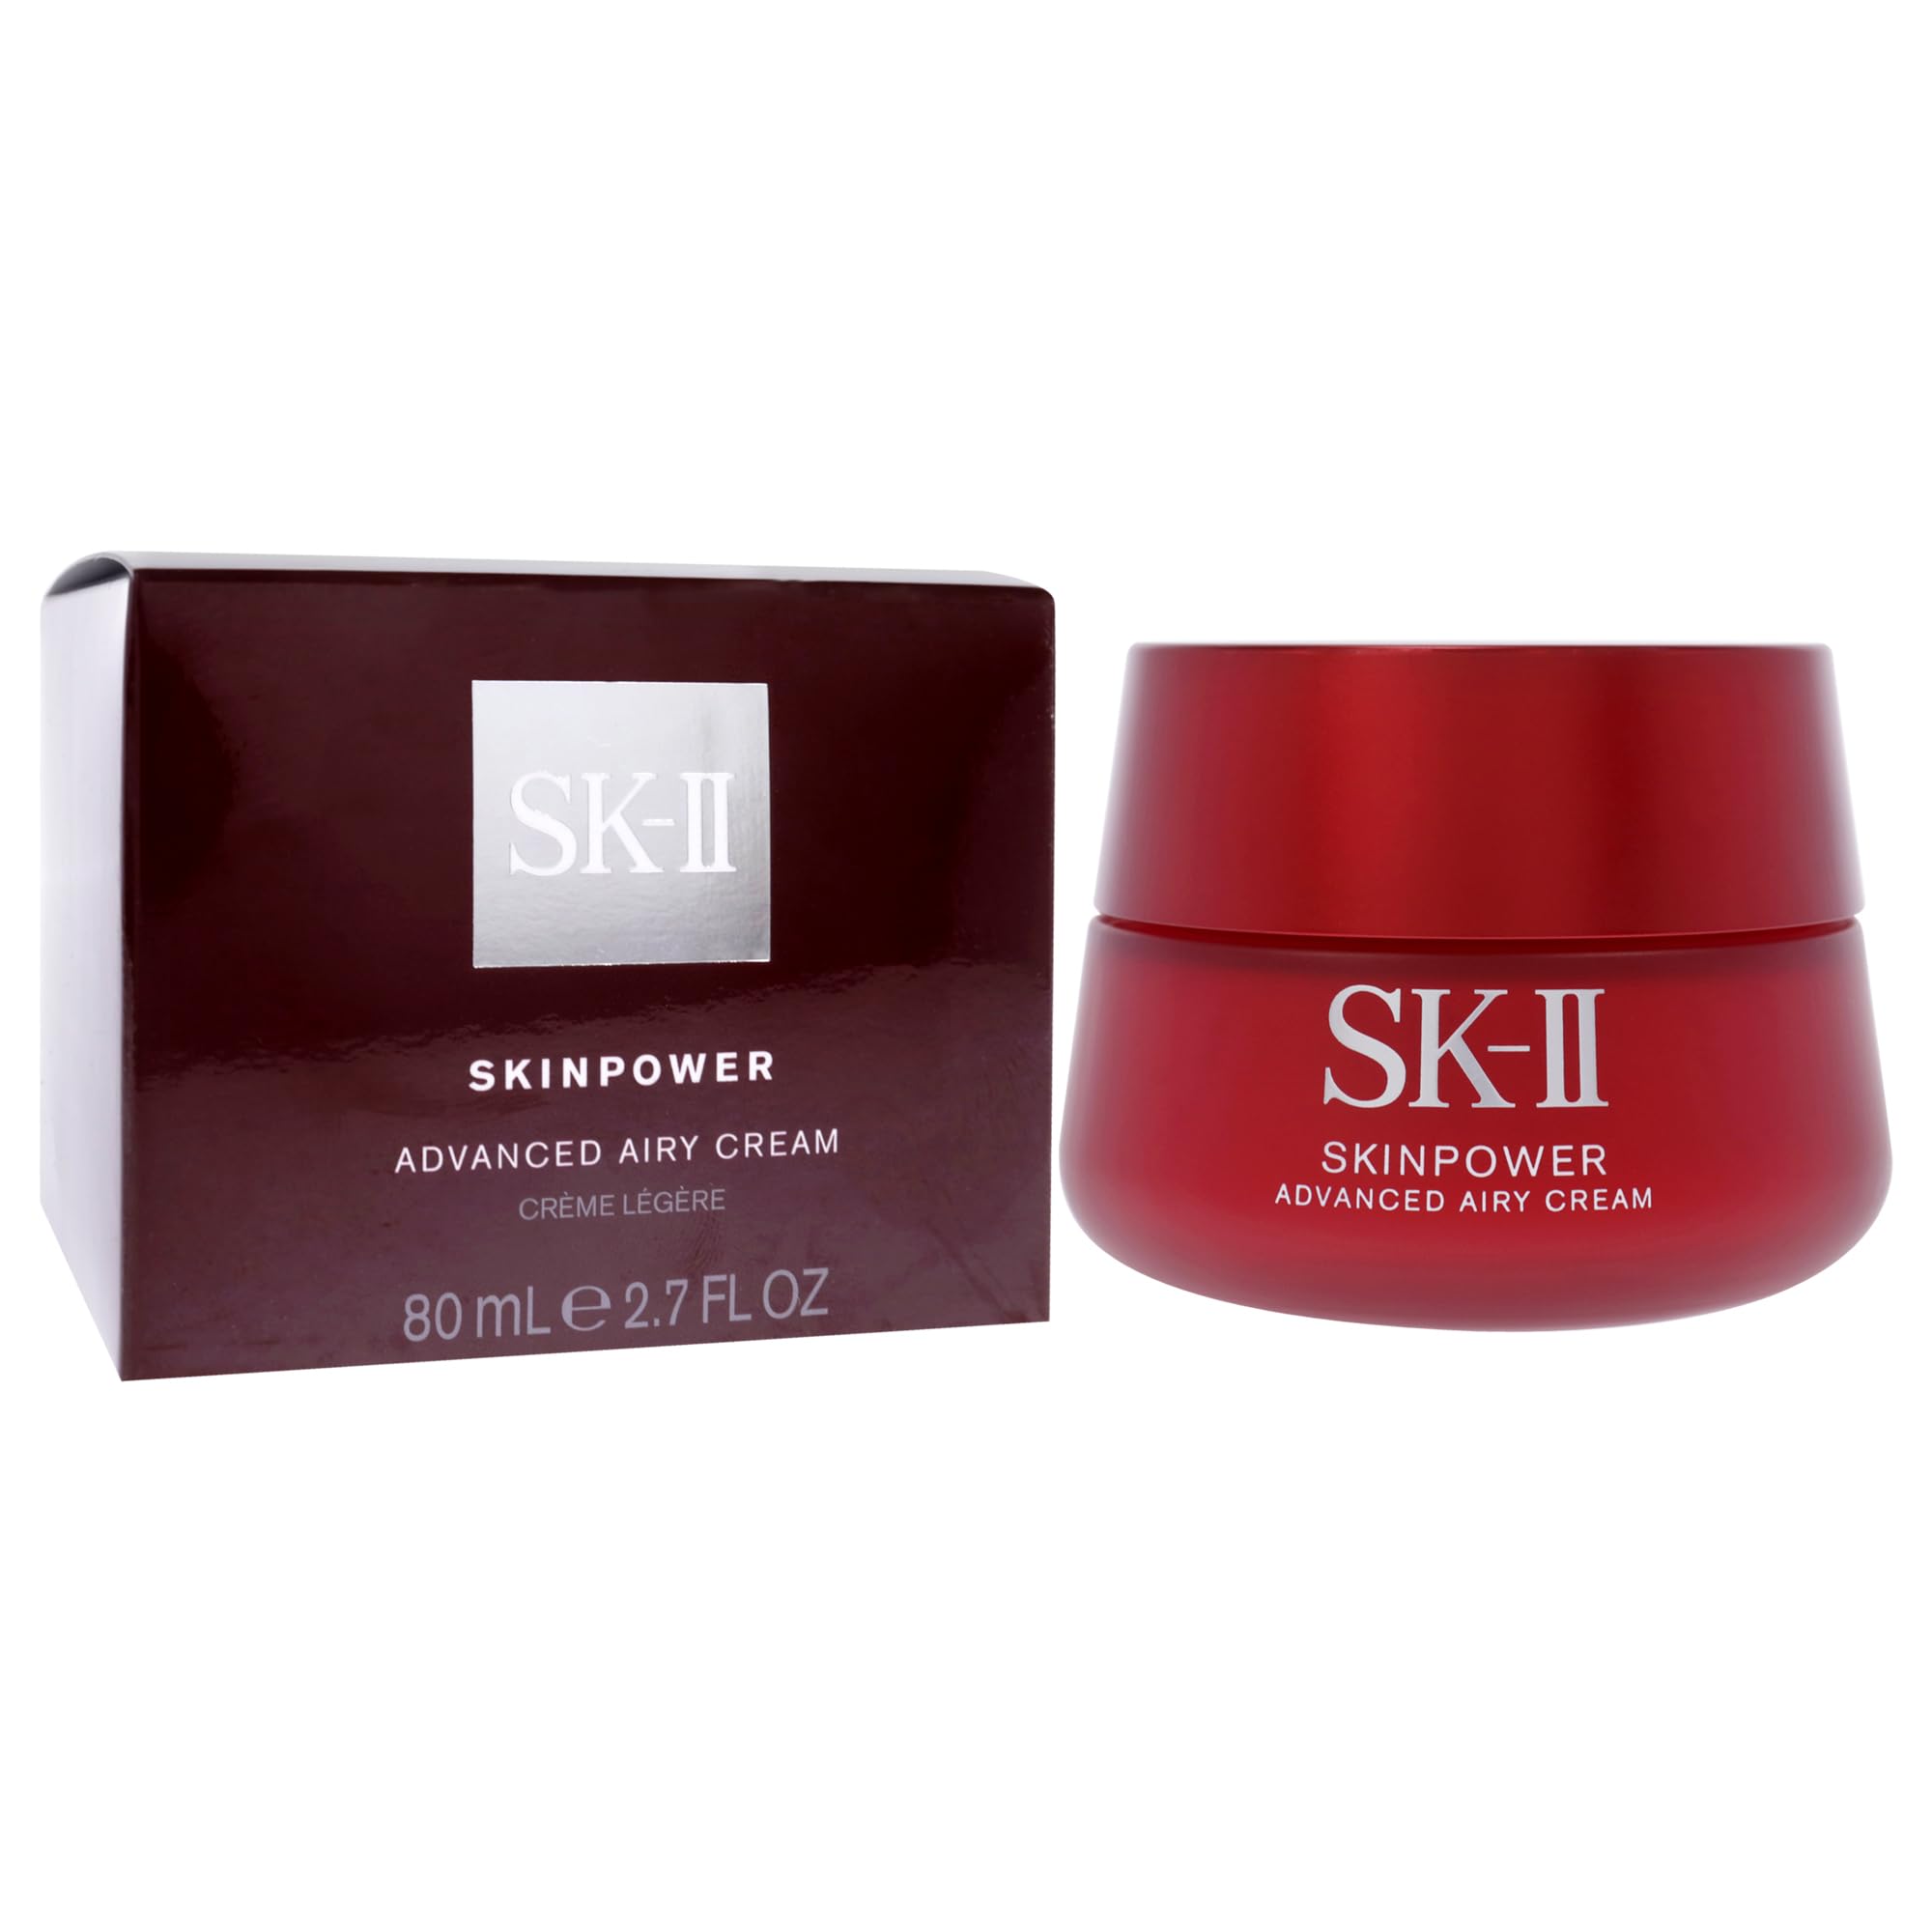 SK-II Skinpower Advanced Airy Cream, 2.7 Ounce